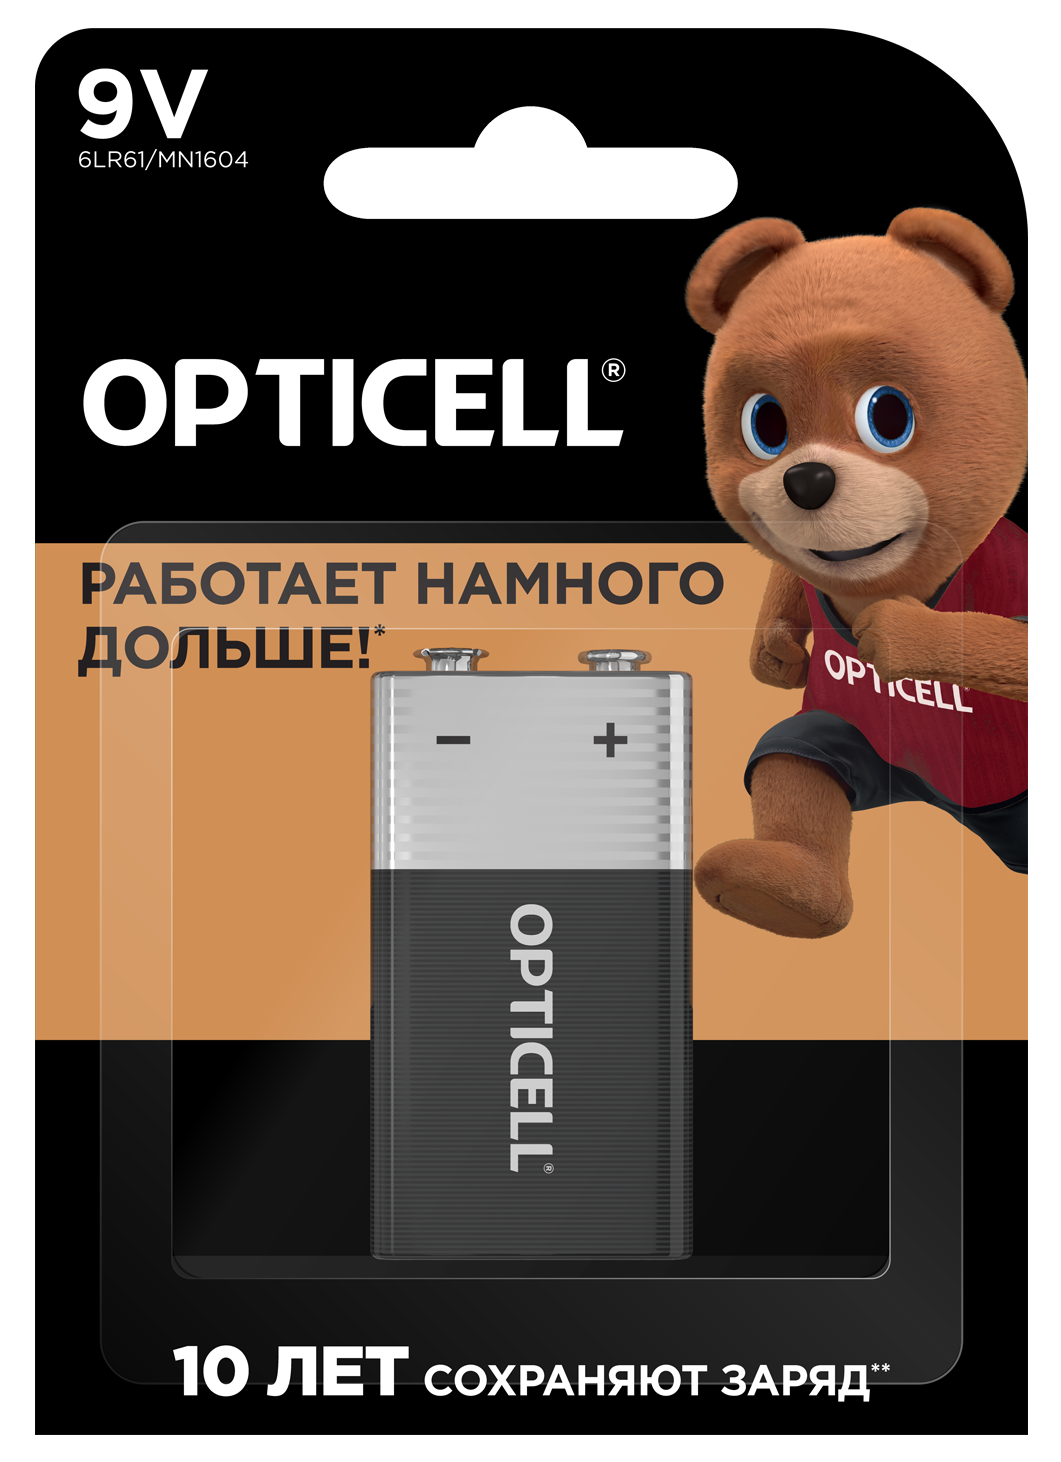 Батарейки Opticell 6LR61 крона 9V BL1 1шт рамка вкладыш крона день за днём